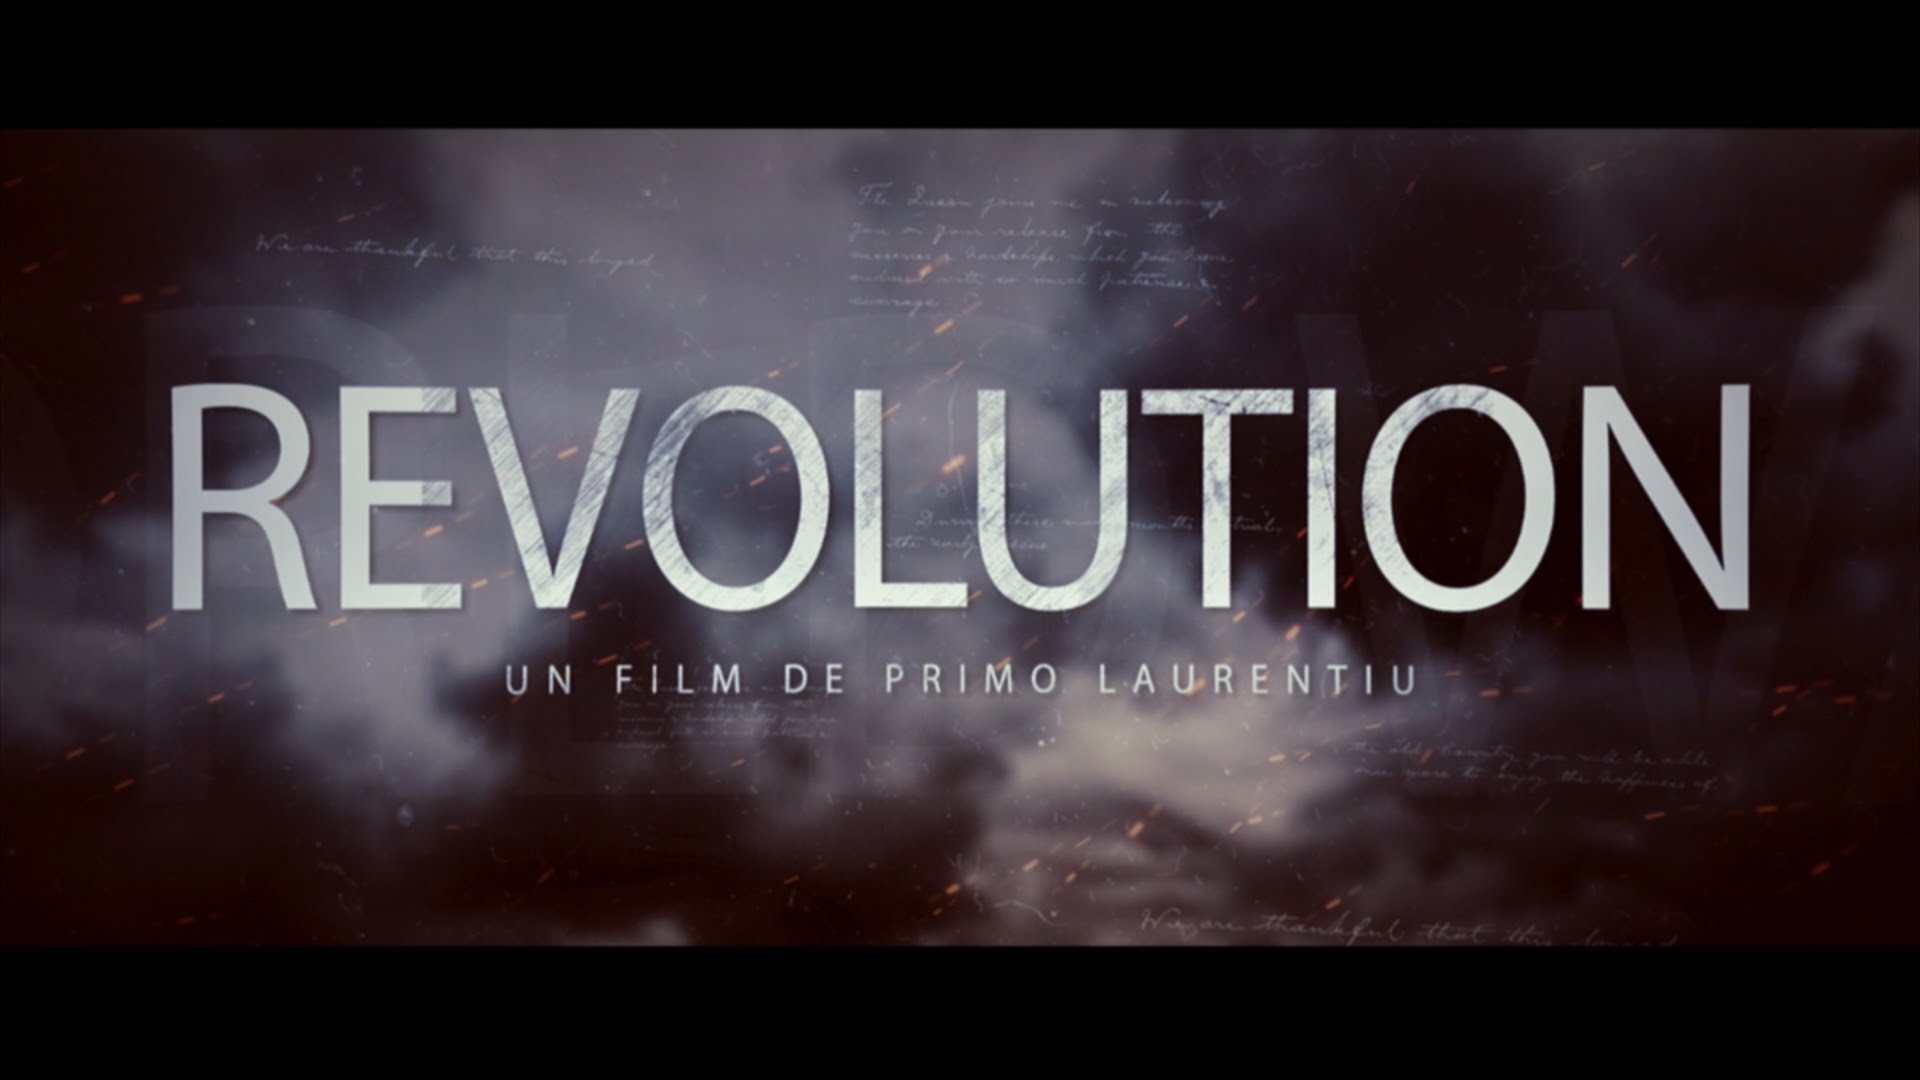 Revolution | Documentary 2016 by Primo Laurentiu